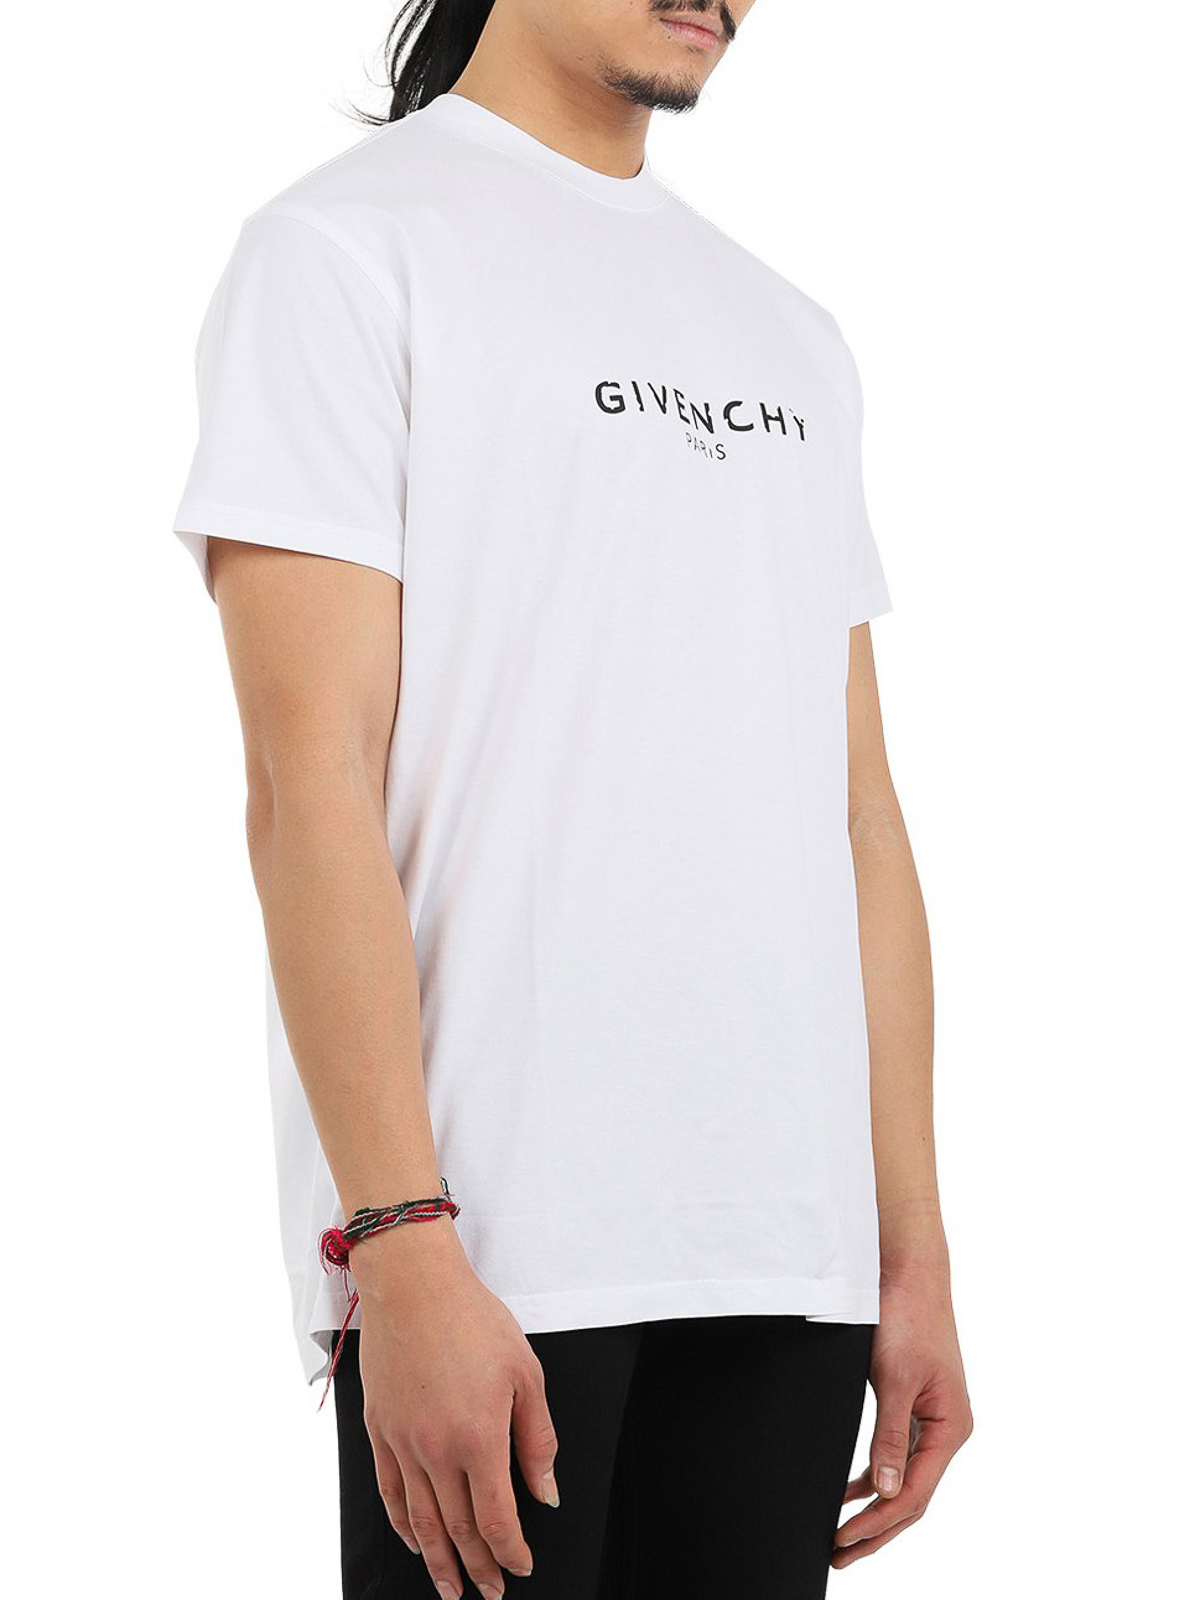 givench t shirt